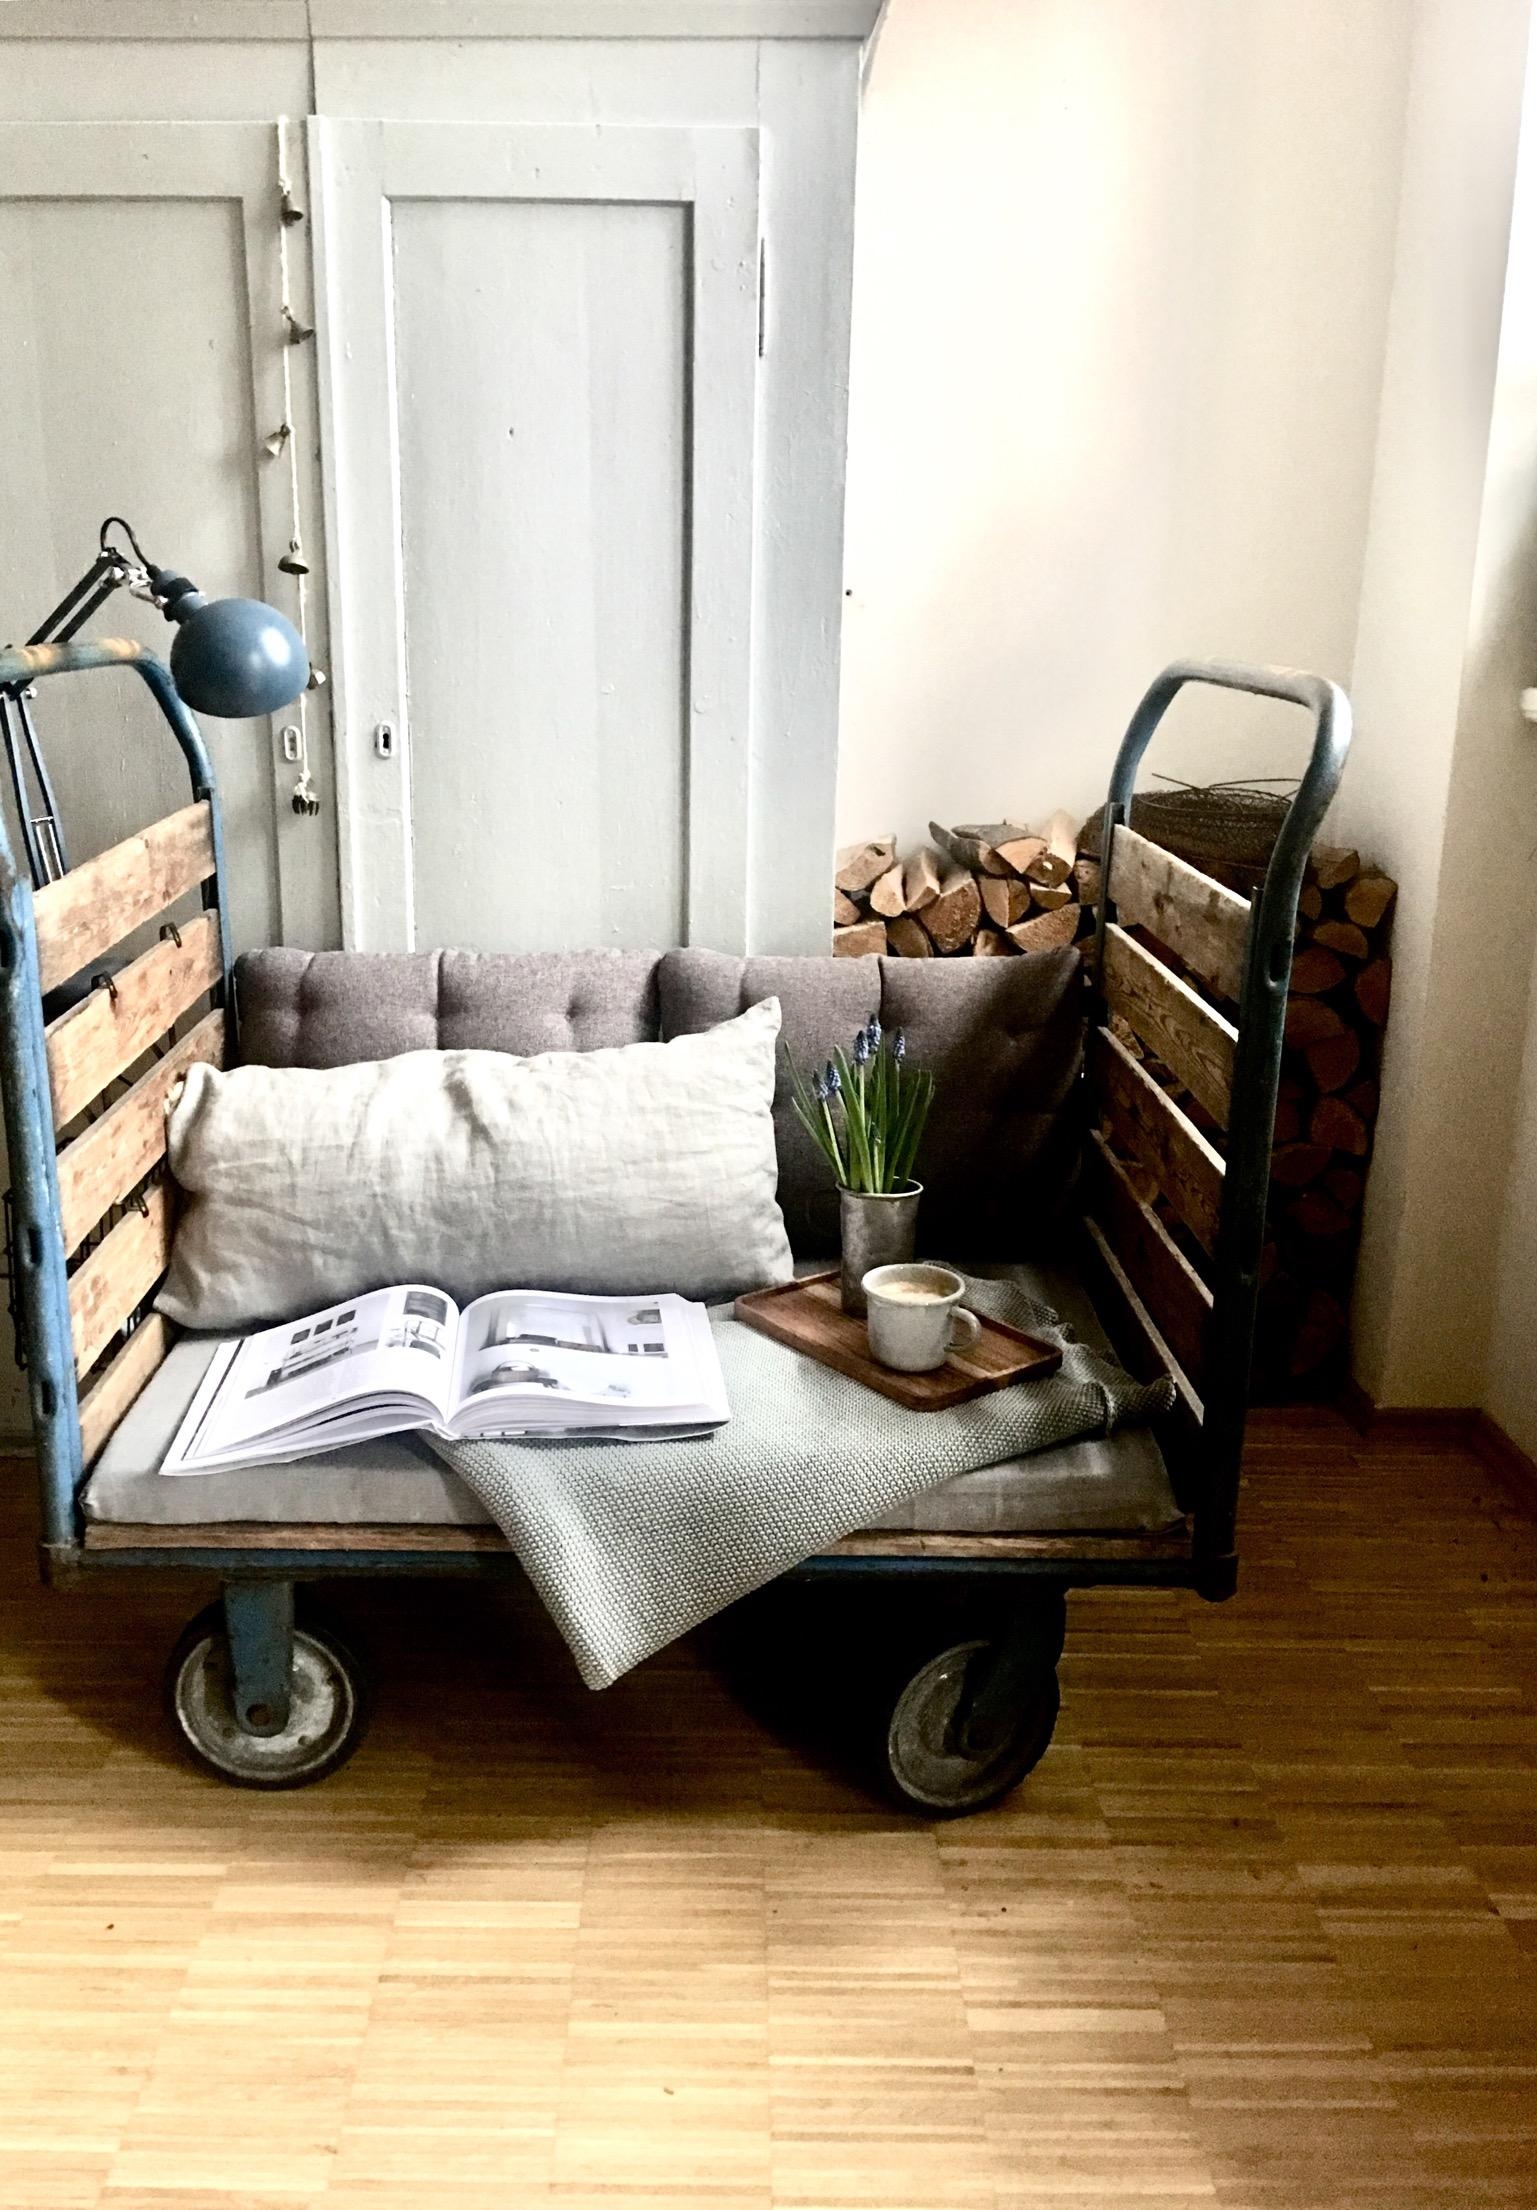 Unser daybed aus dem Gepäckwagen
#diyweek#upcycling#couchliebt#repost#wagen#bett#kissen#lampe#blume#tablett#buch#kaffee